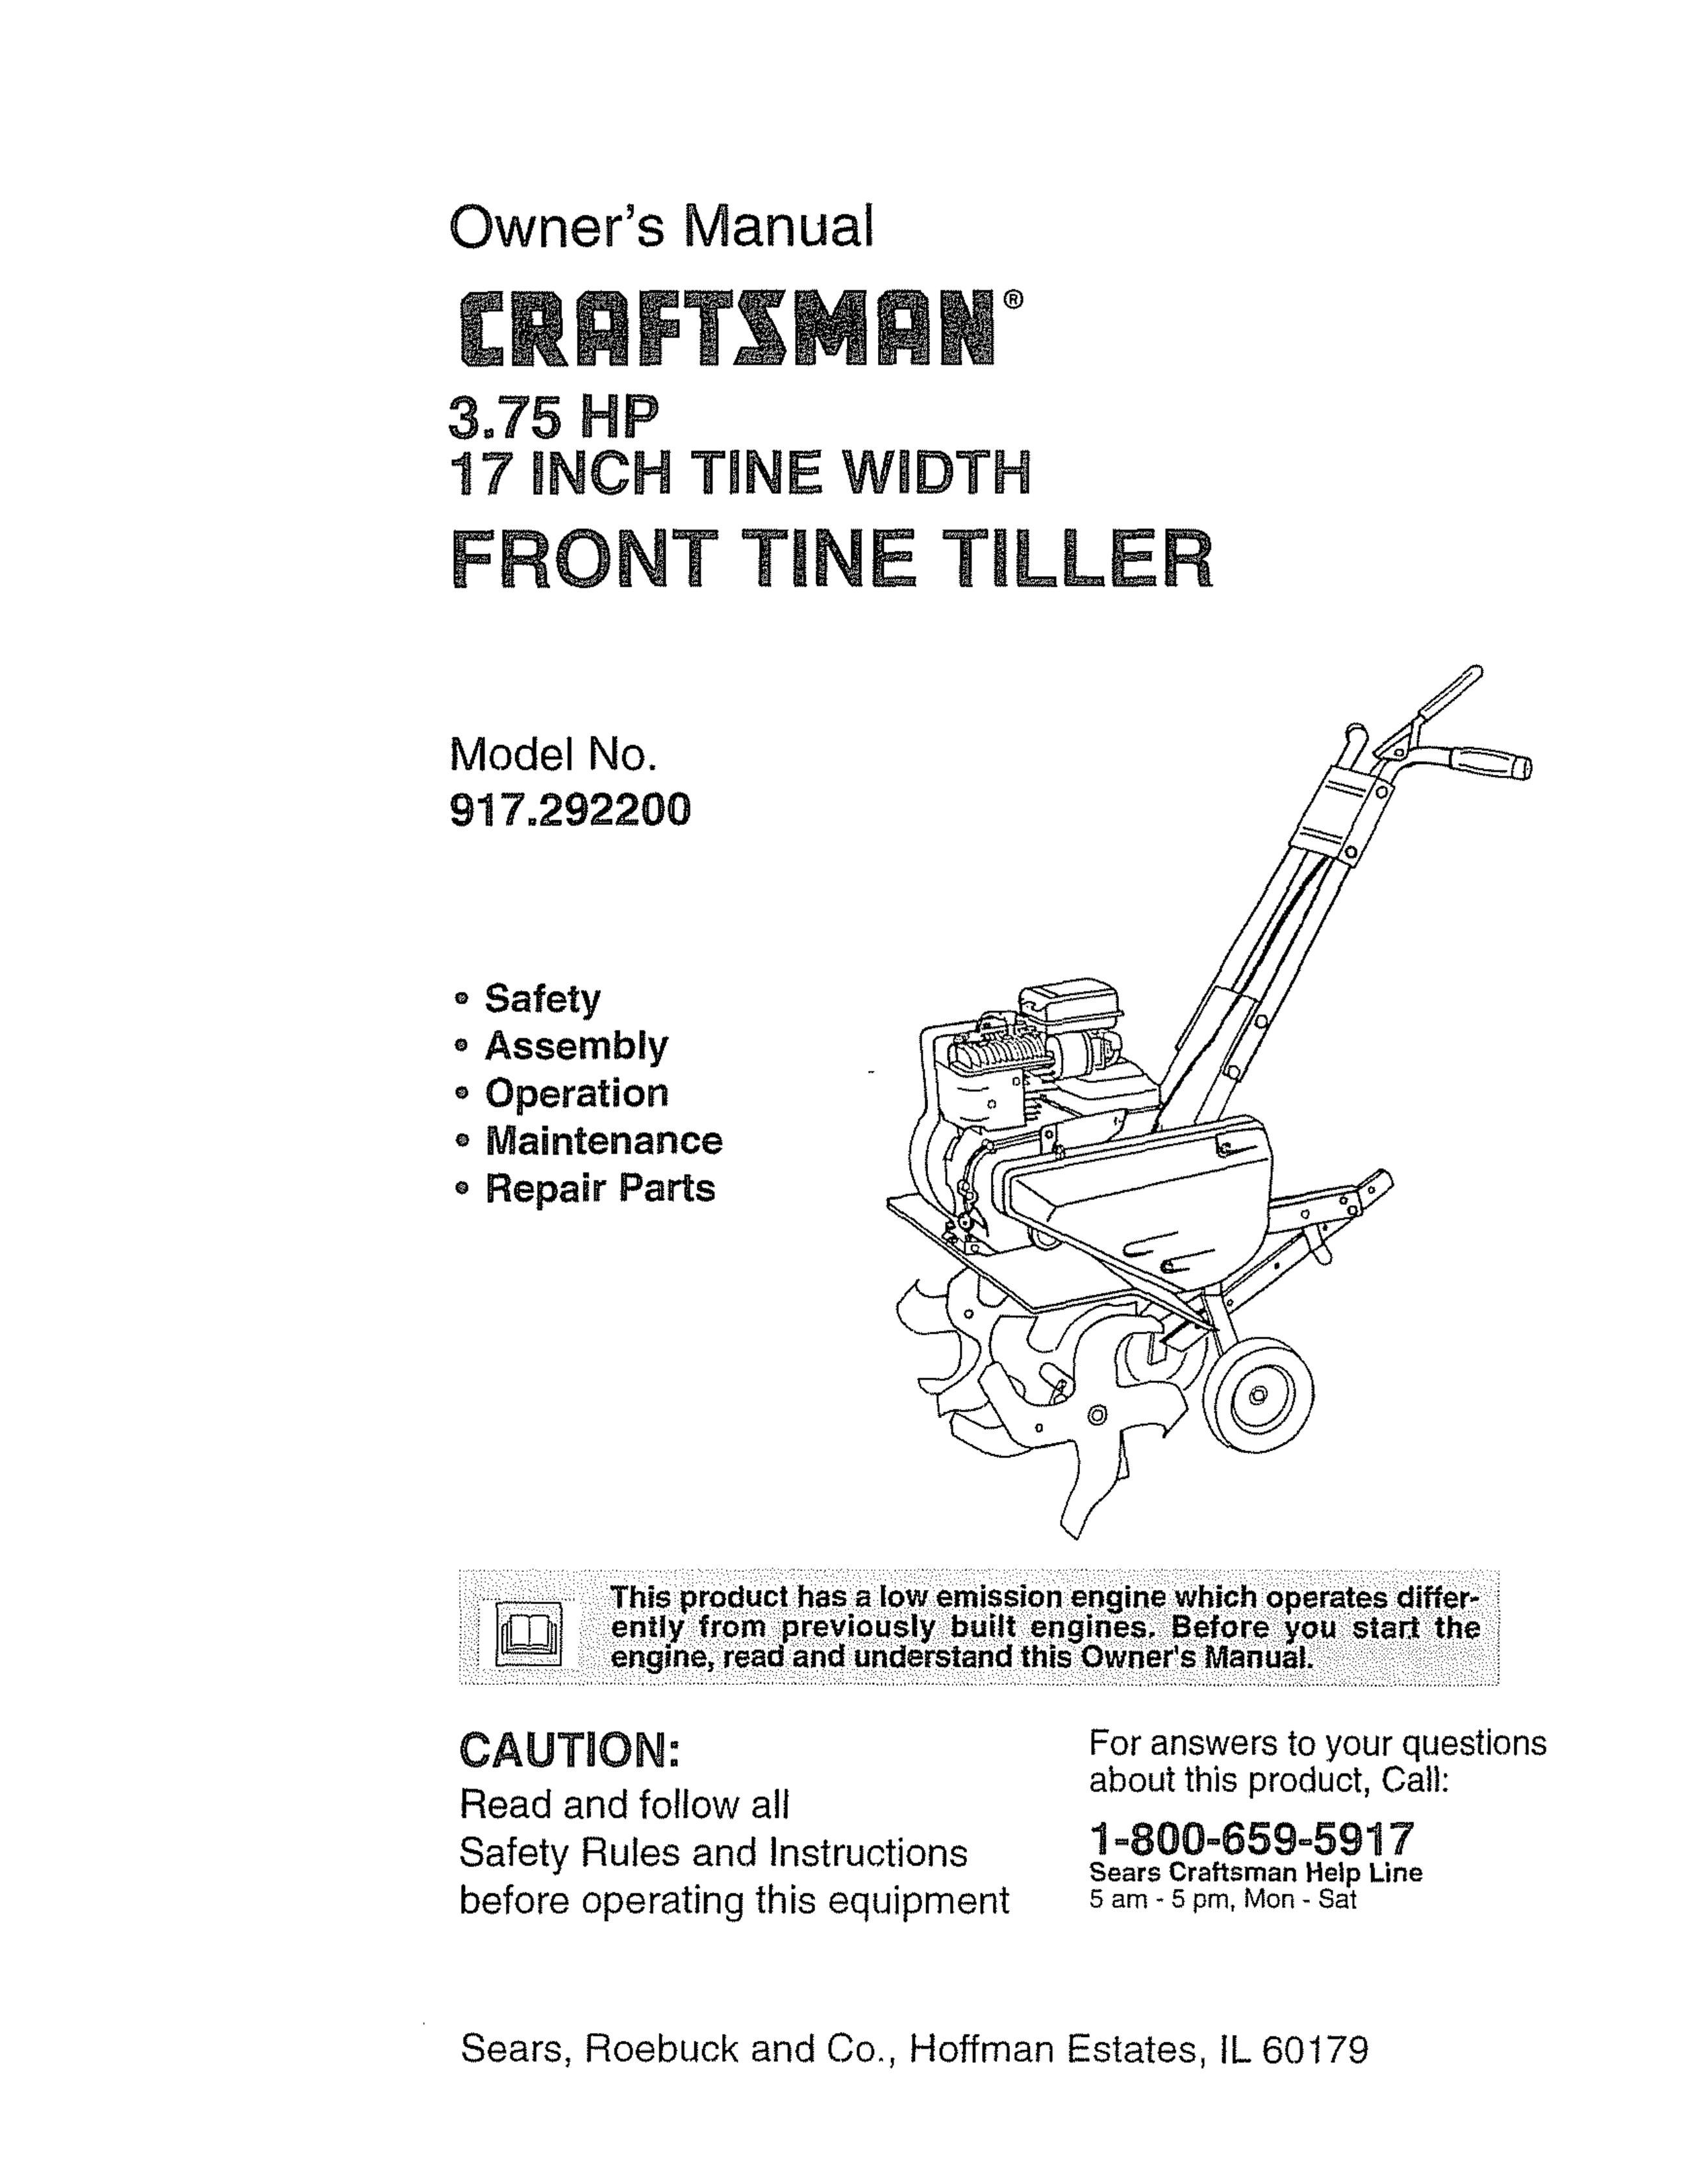 Craftsman 917.2922 Tiller User Manual